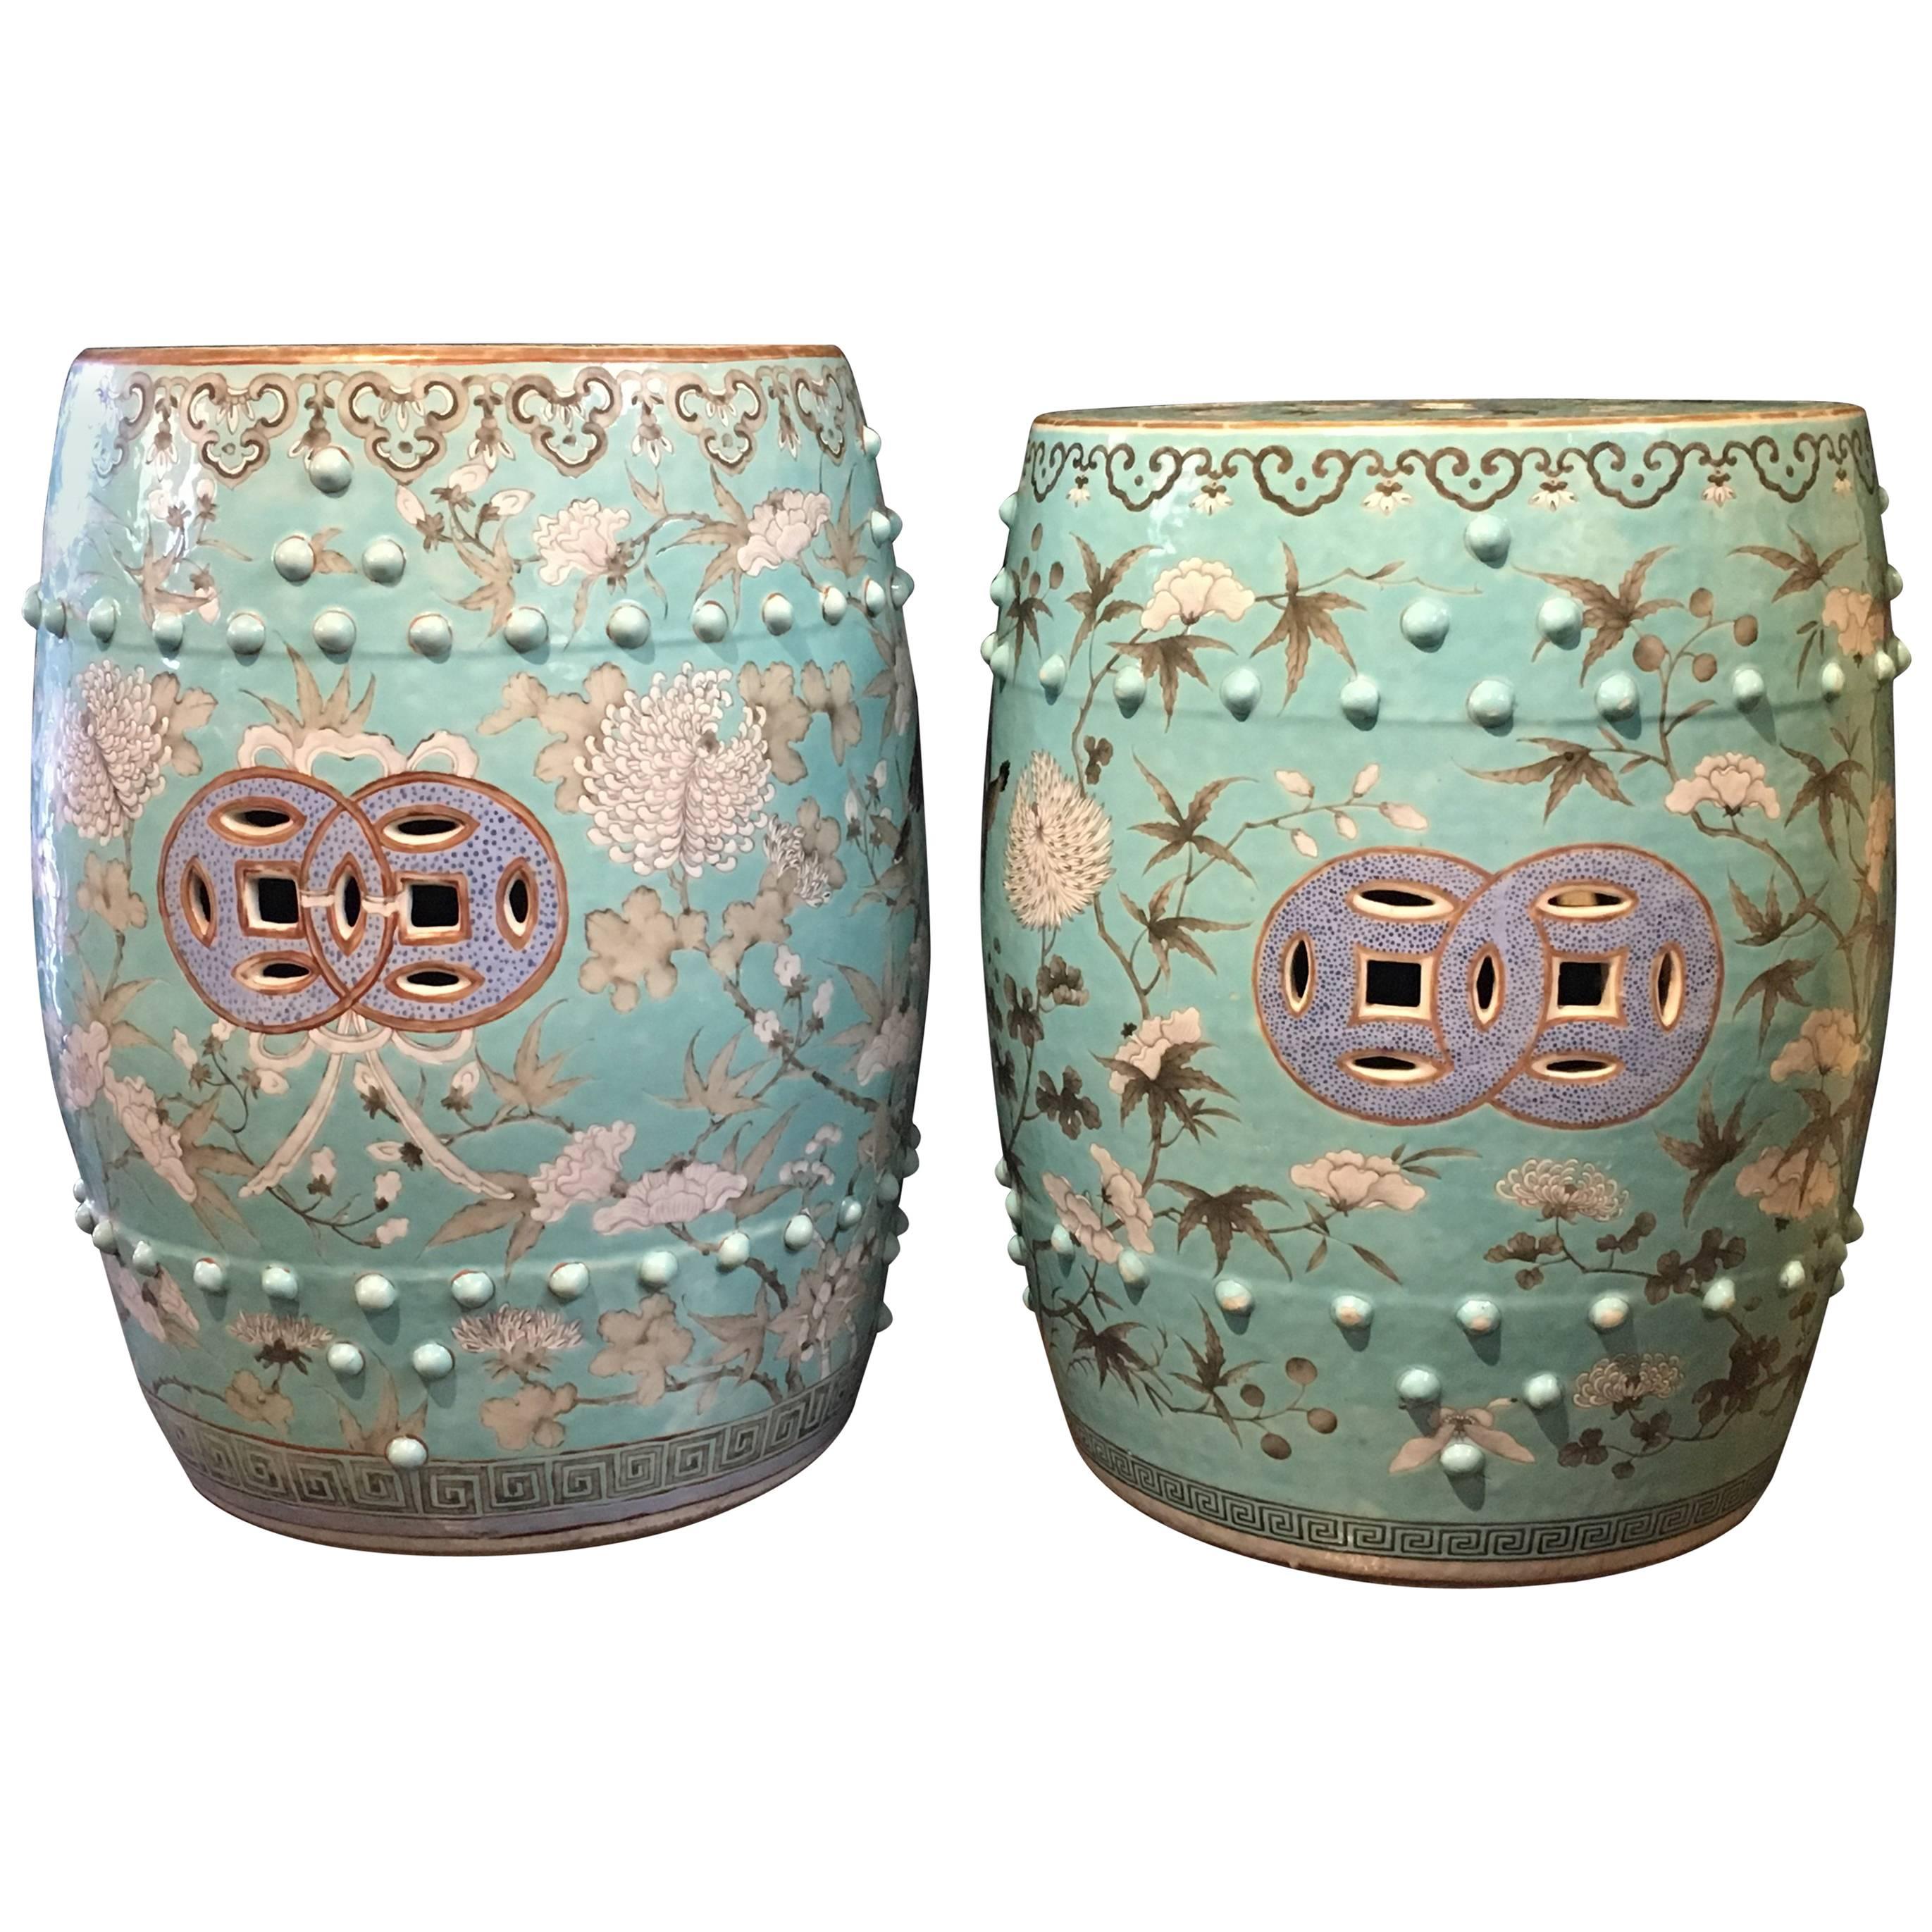 Torquoise Urban Trends 23210 Decorative Ceramic Garden Stool 